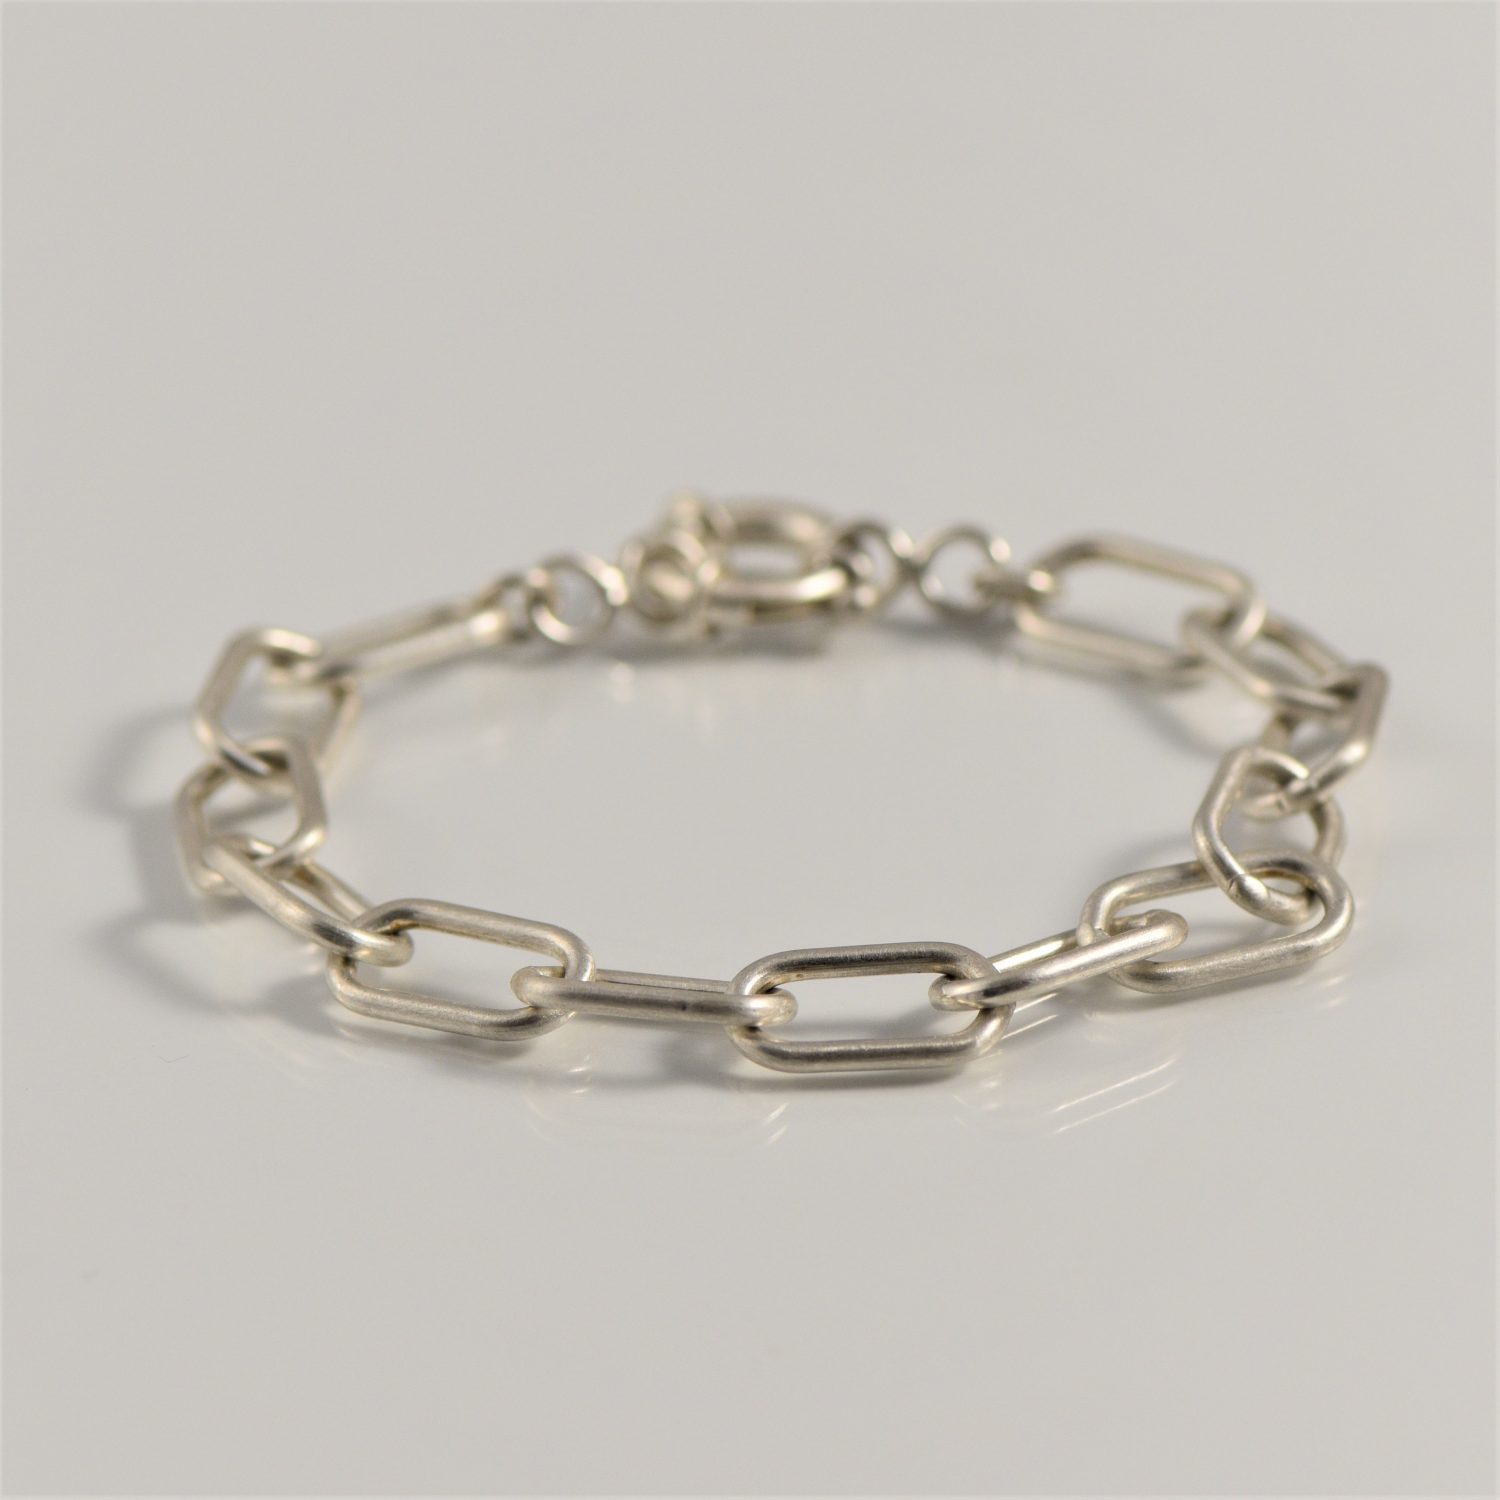 Chain silver - bransoletka